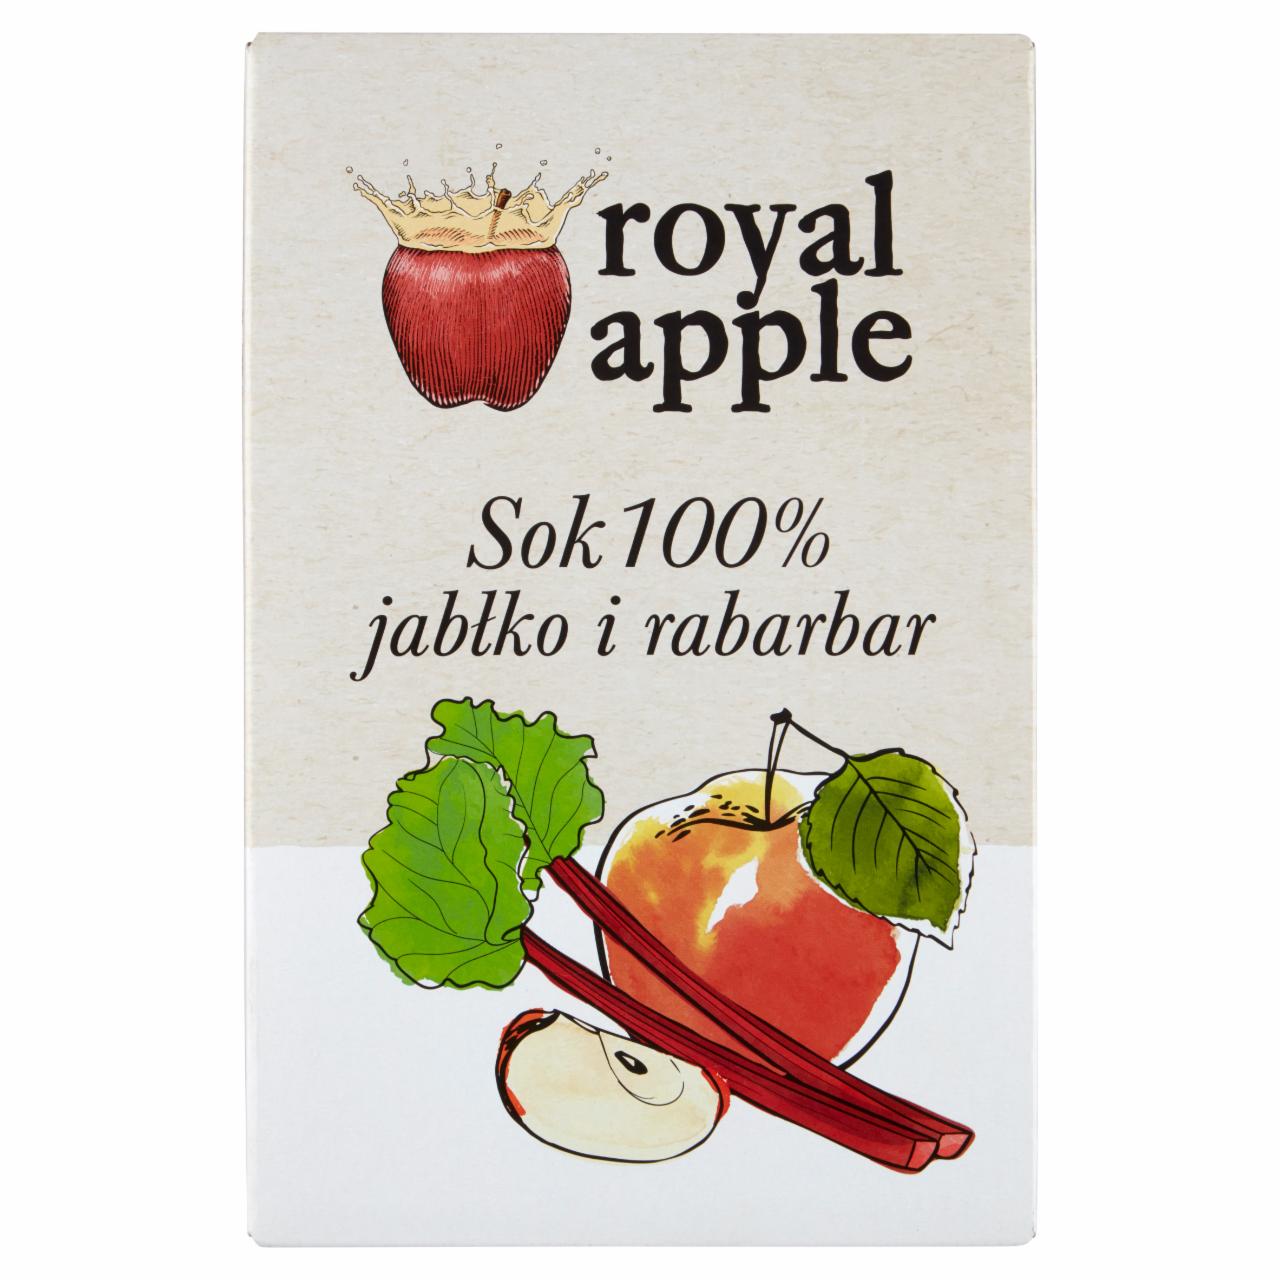 Zdjęcia - Royal apple Sok 100 % jabłko i rabarbar 3 l